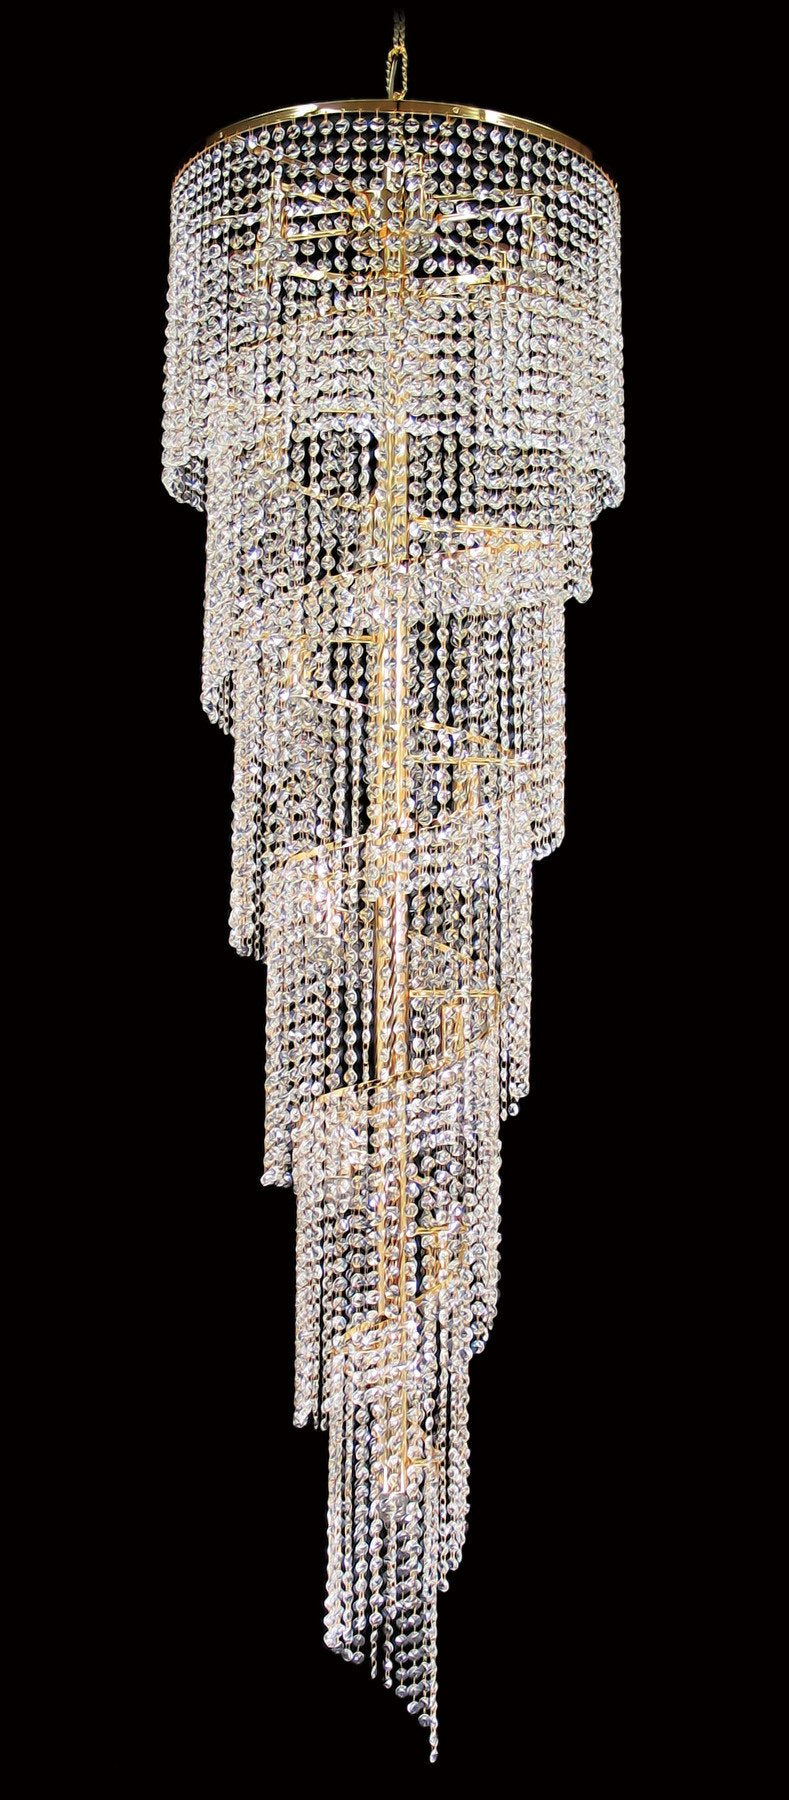 701 Crystal Pendant Light - 20" 17 Lights - Asfour Crystal 14mm Beads - Chandelier [701-20"-14mm]